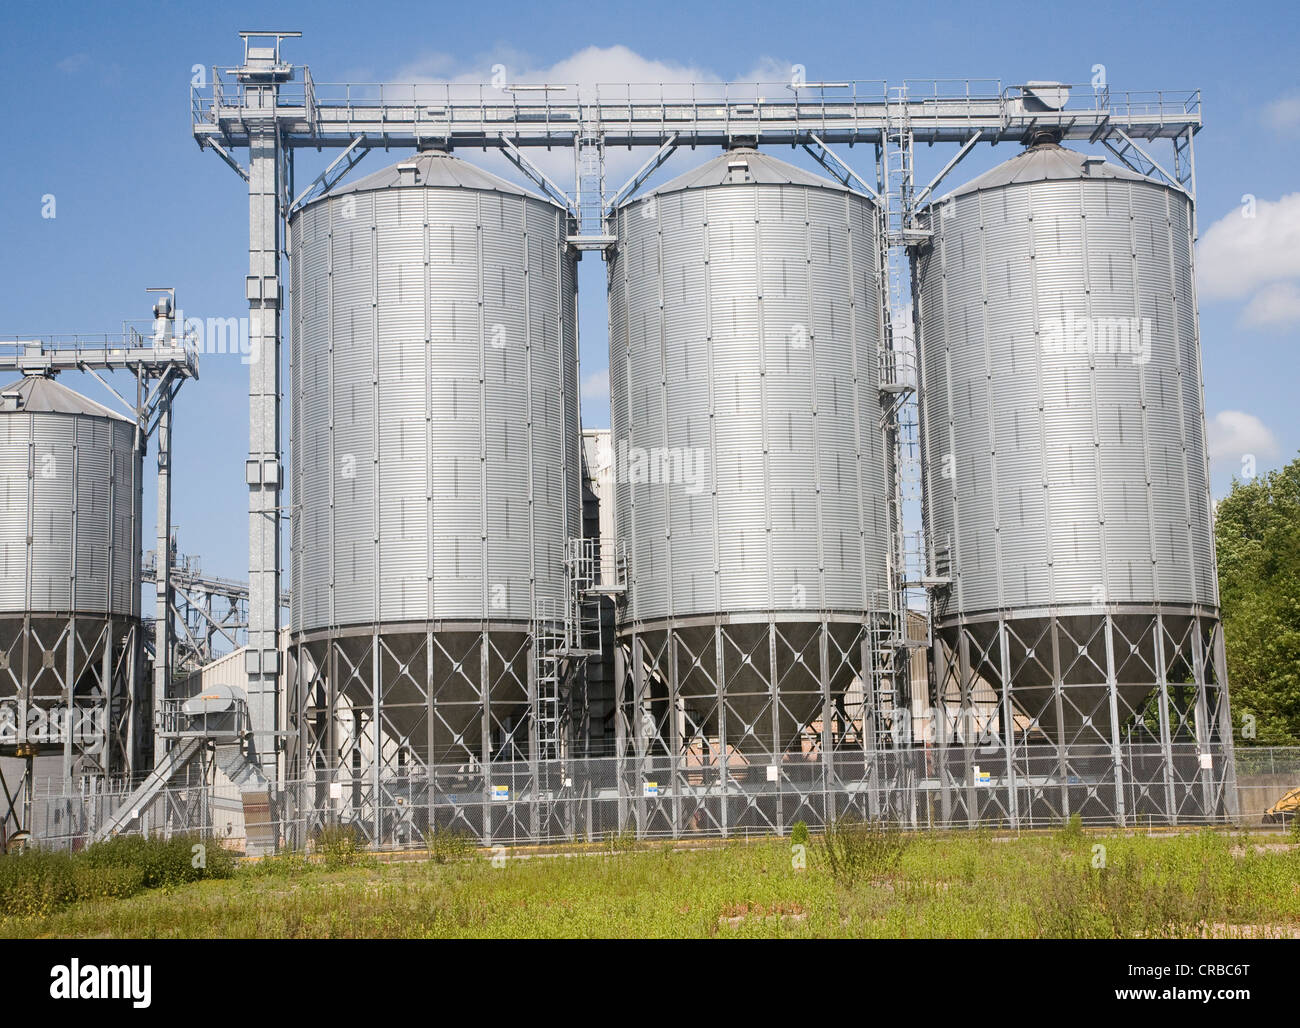 Steel barley grain silos Mendlesham, Suffolk, England Stock Photo